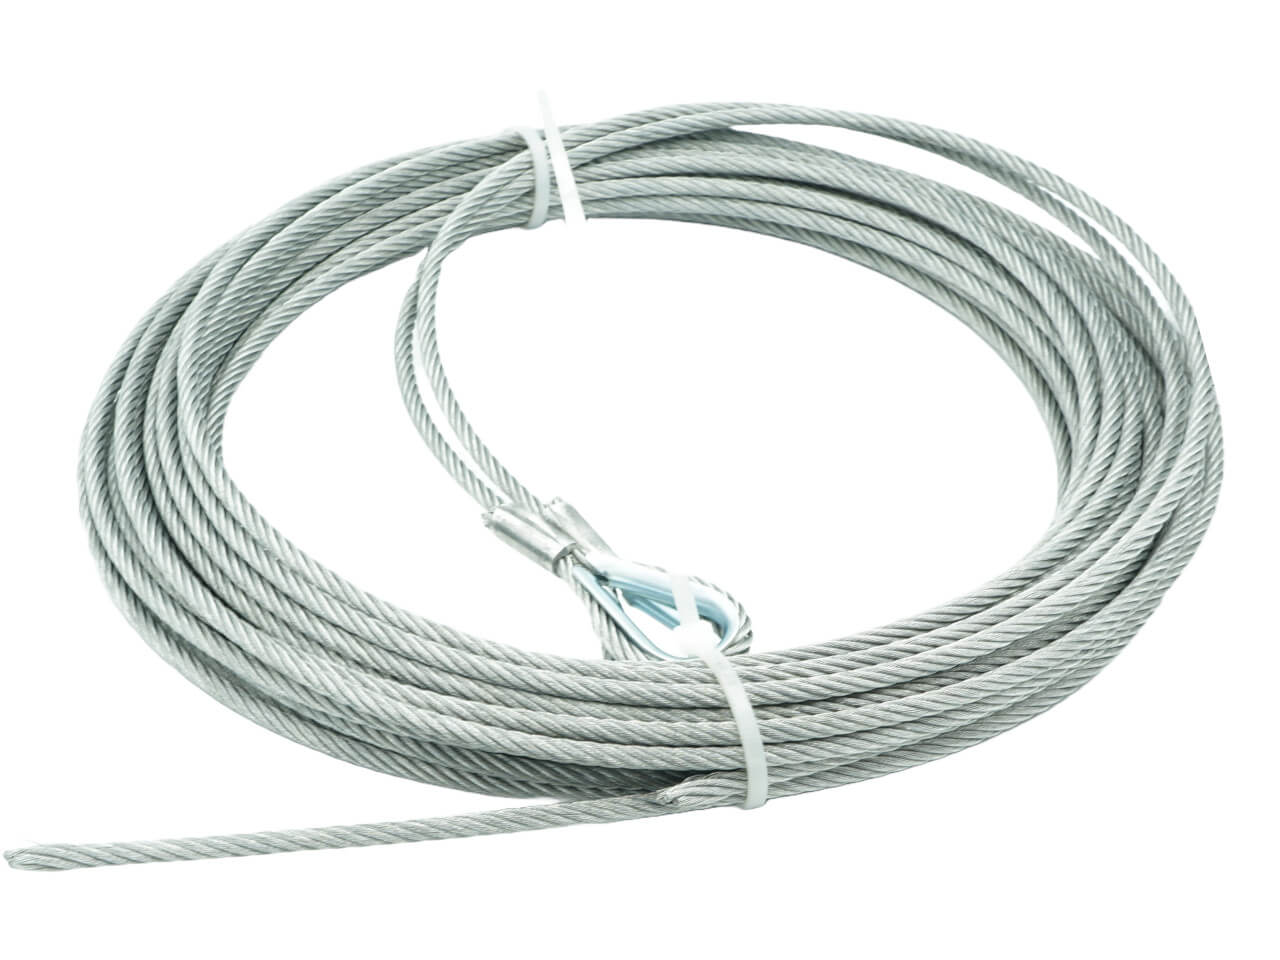 Cable Diameter 5,0mm Length 8m